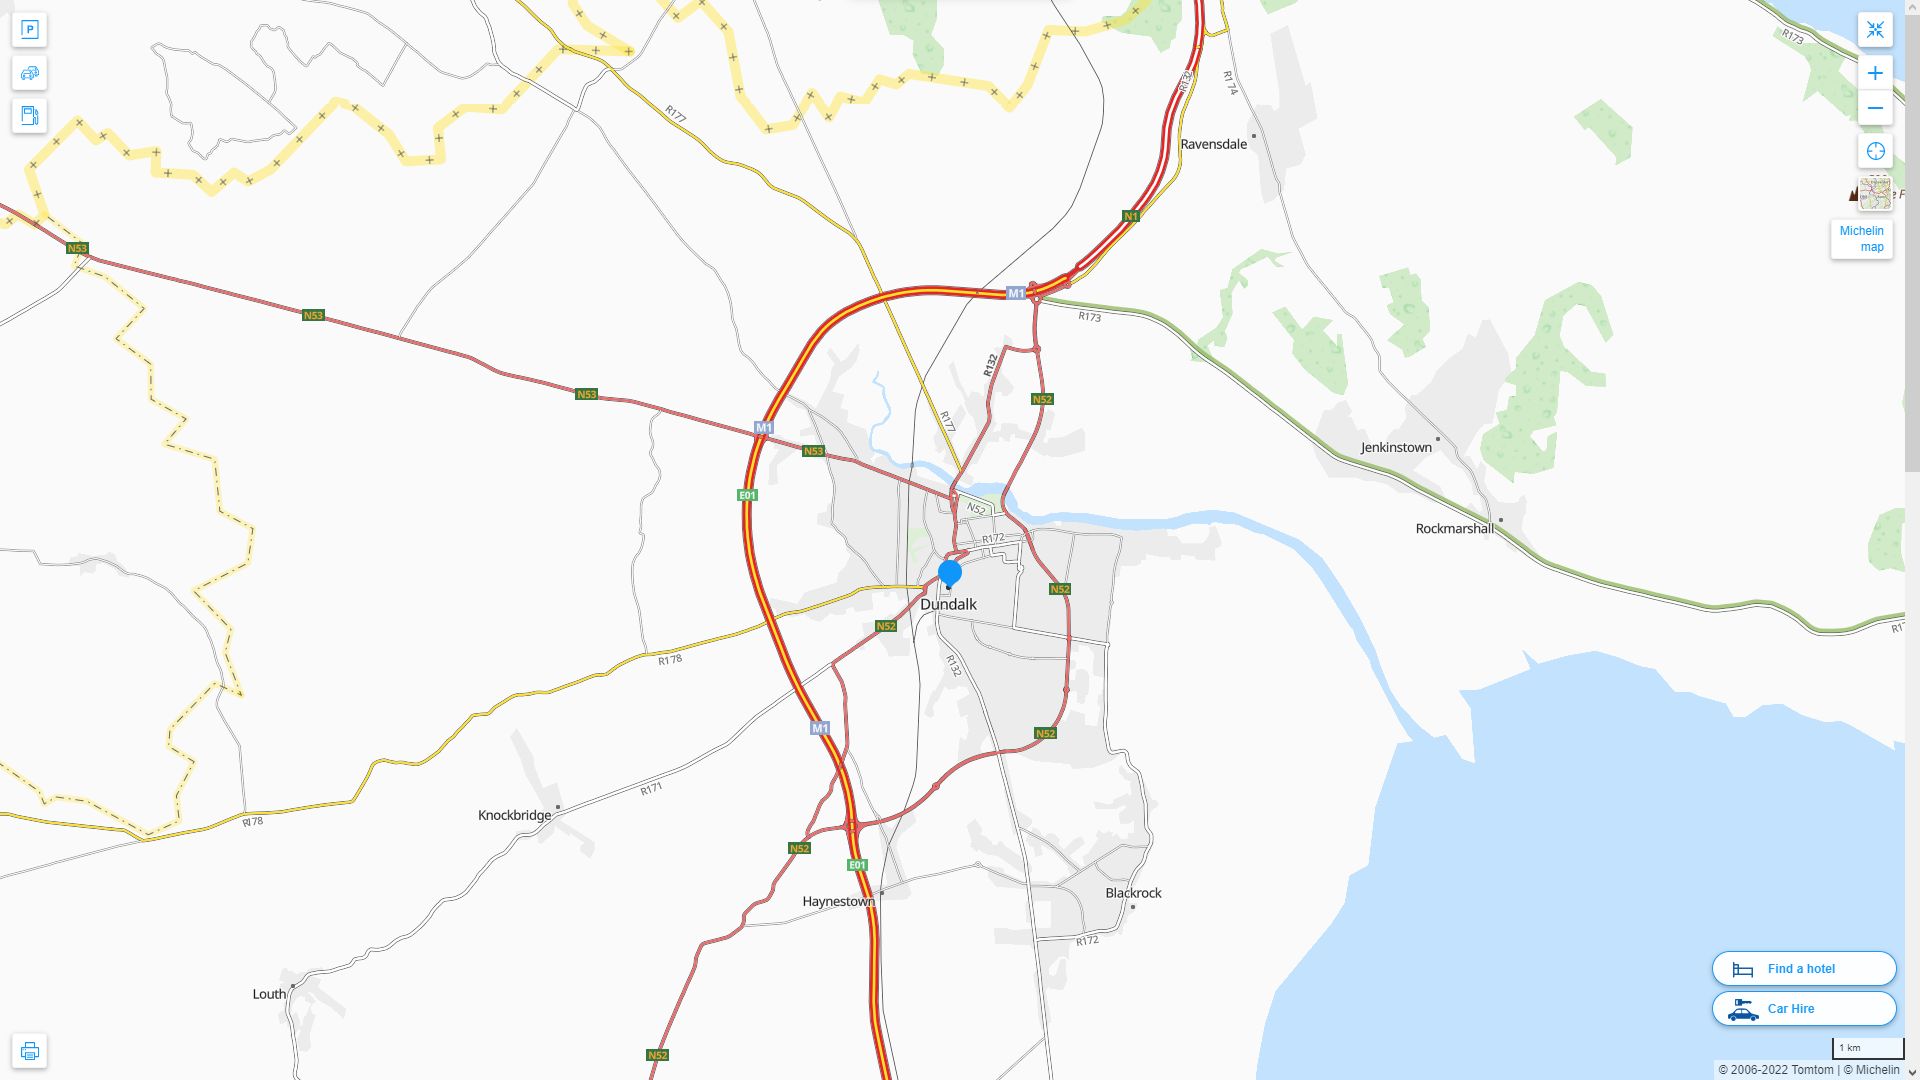 Dundalk Irlande Autoroute et carte routiere